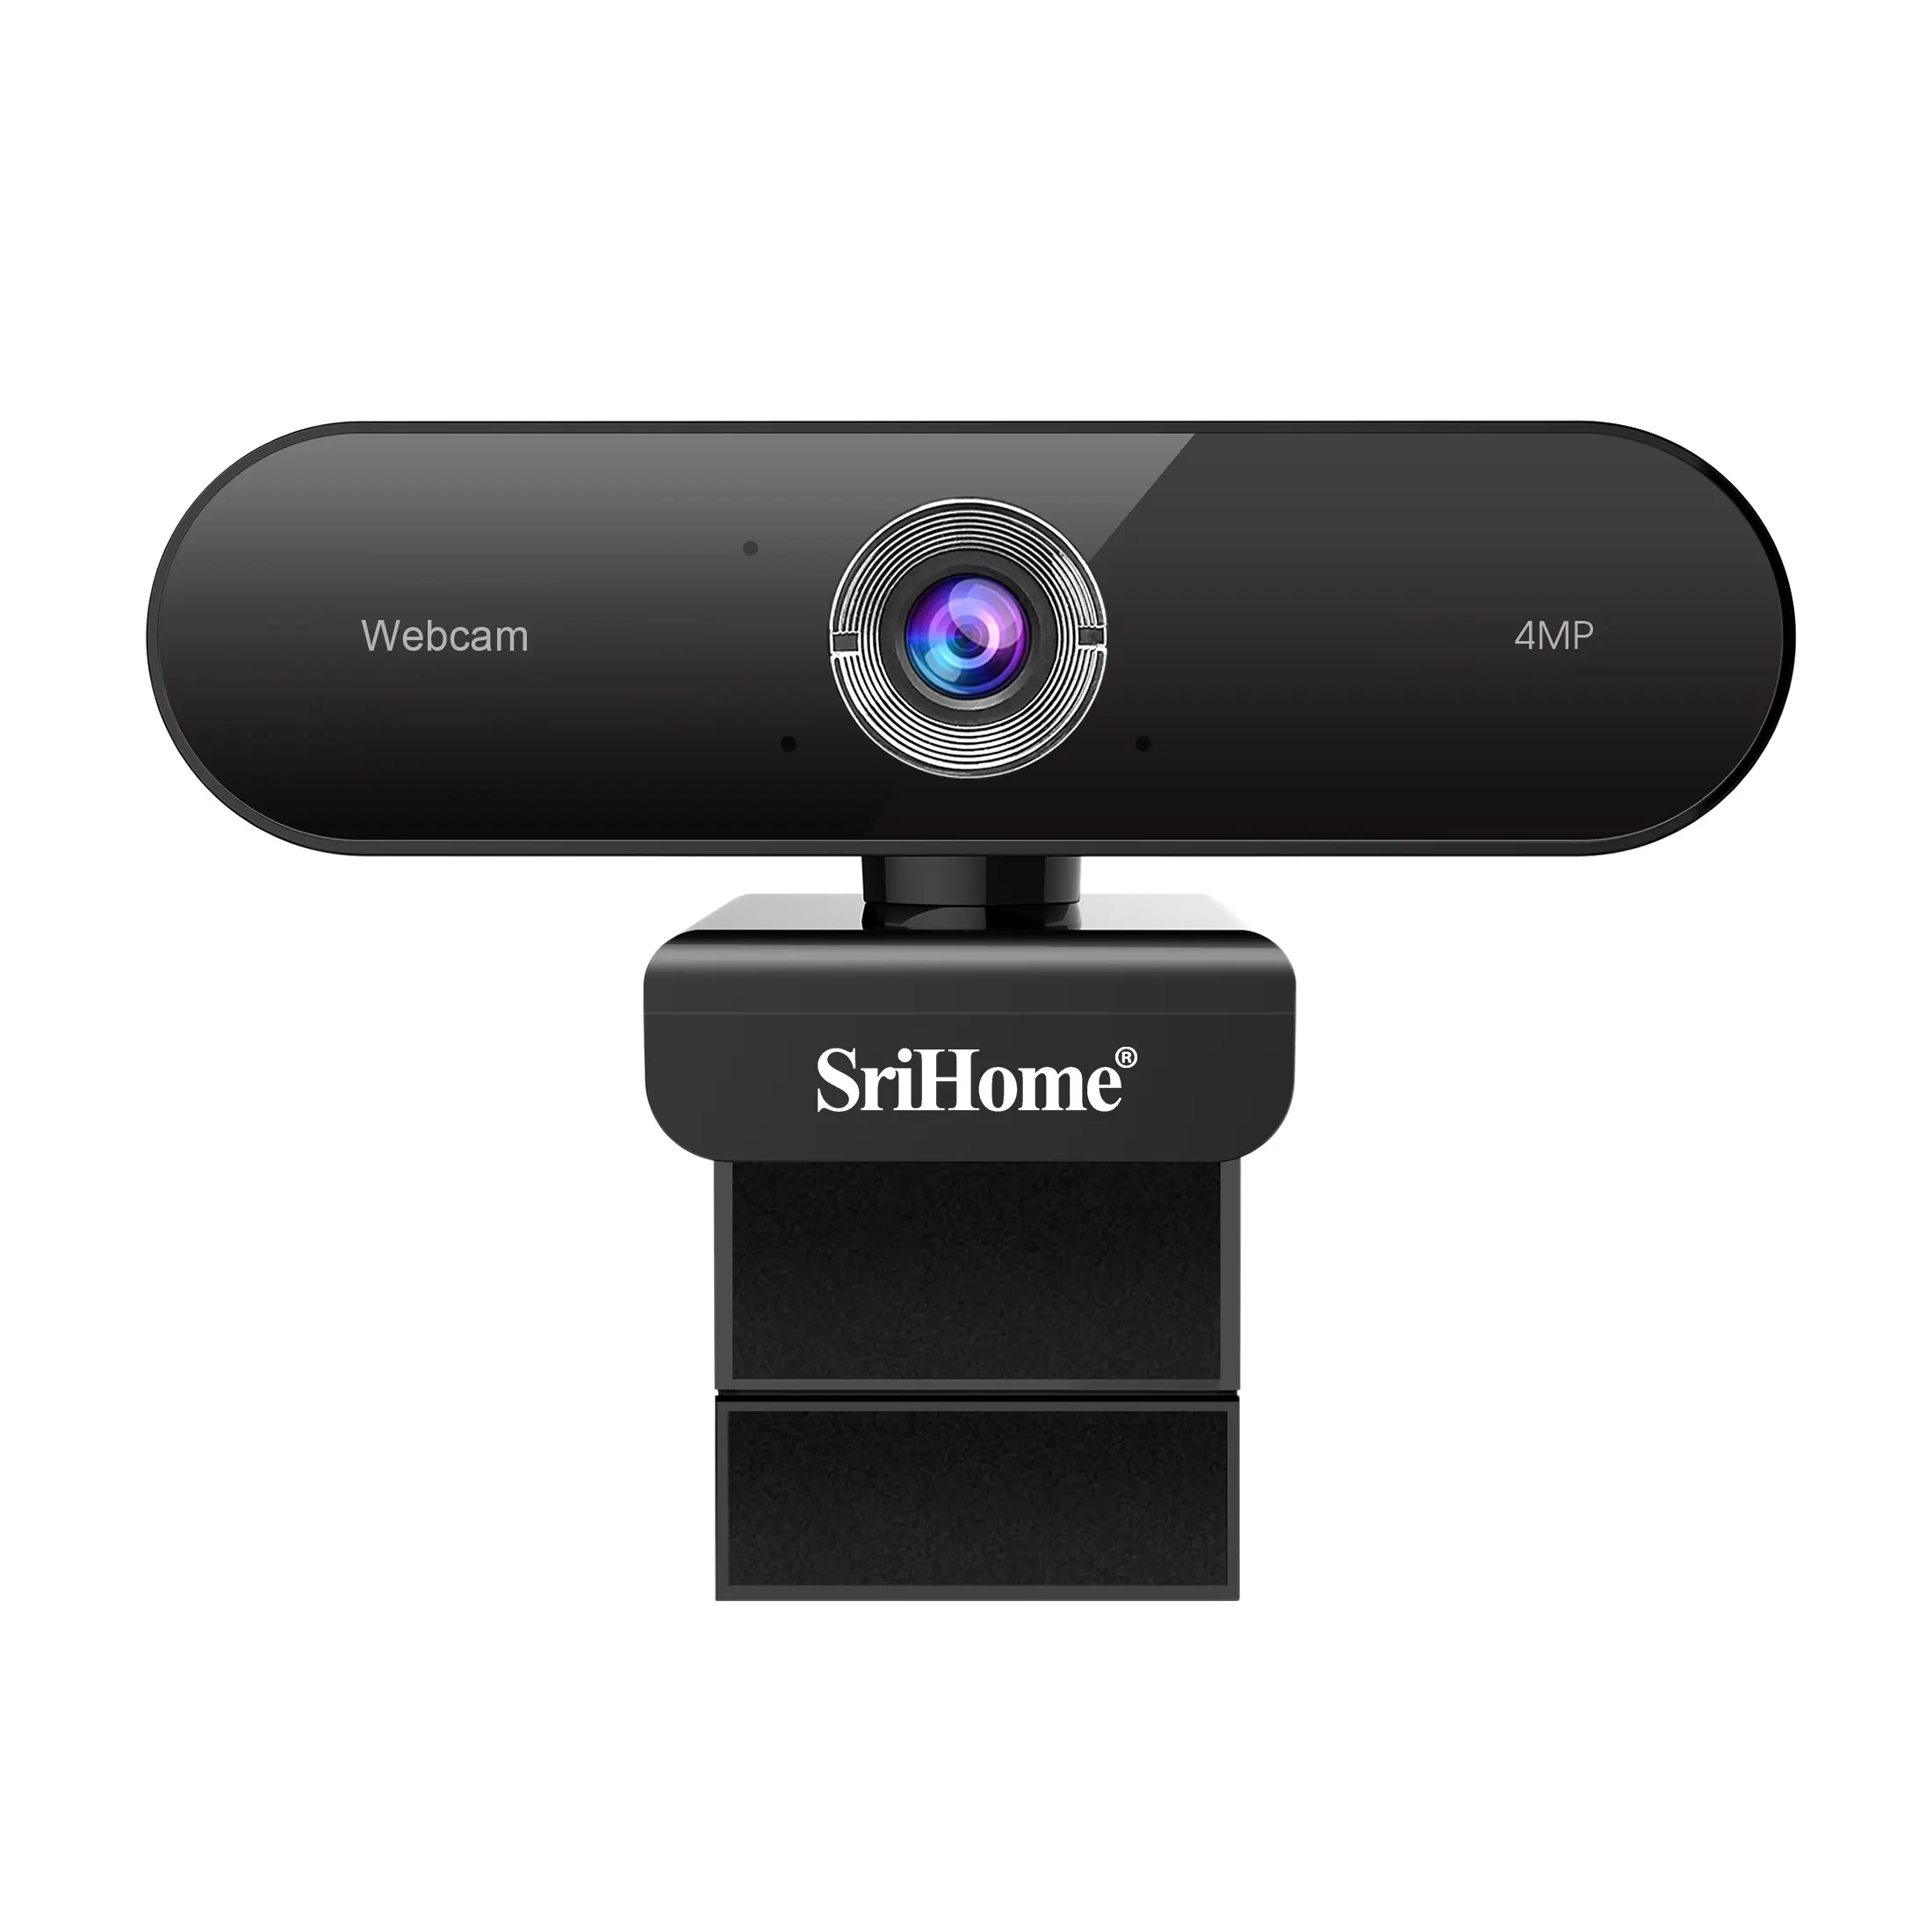 2022 новая дешевая SriHome Sricam камера 4 МП Full HD онлайн Видеозвонок цифровая ПК <span class=keywords><strong>веб</strong></span>-камера